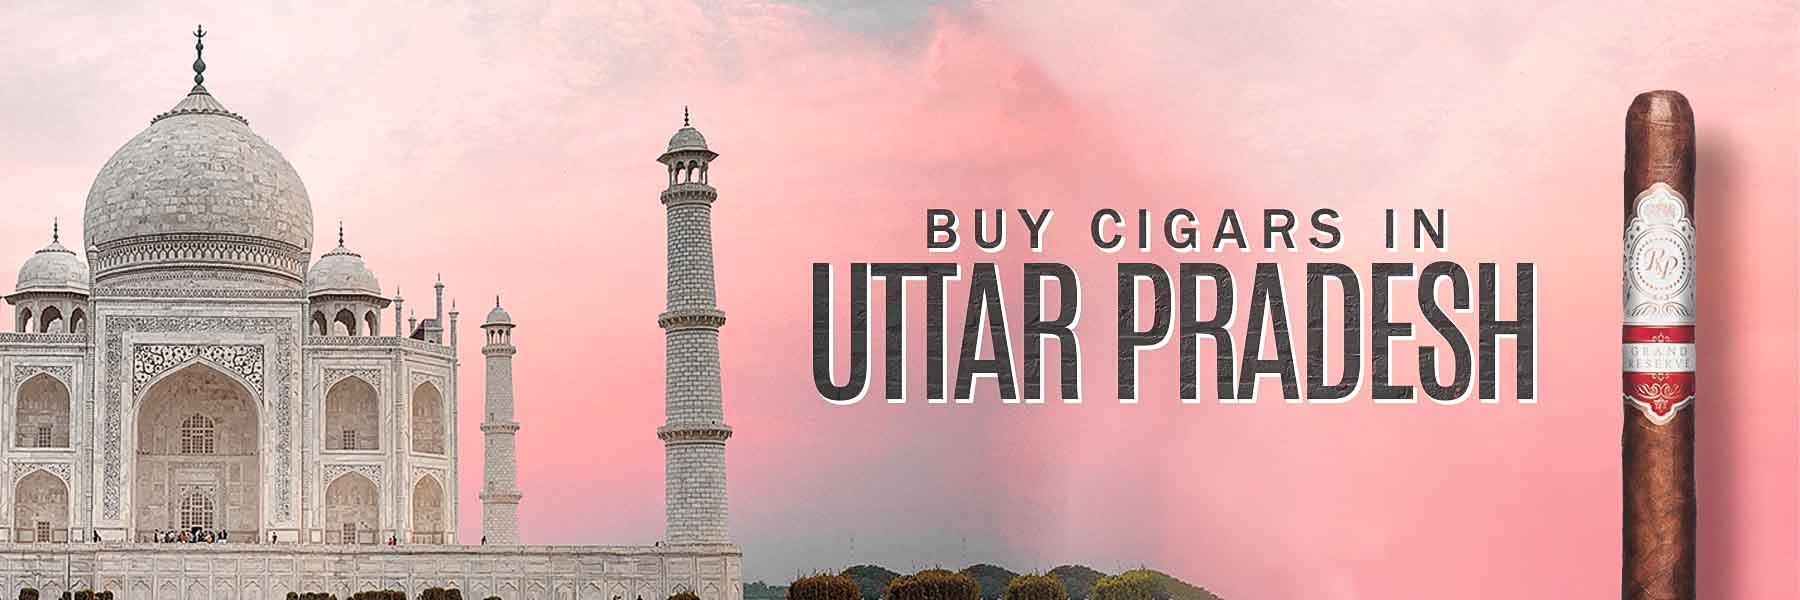 Buy Cigars In Karnataka, Best Cigar Shop In Karnataka, Cigar Price In Karnataka